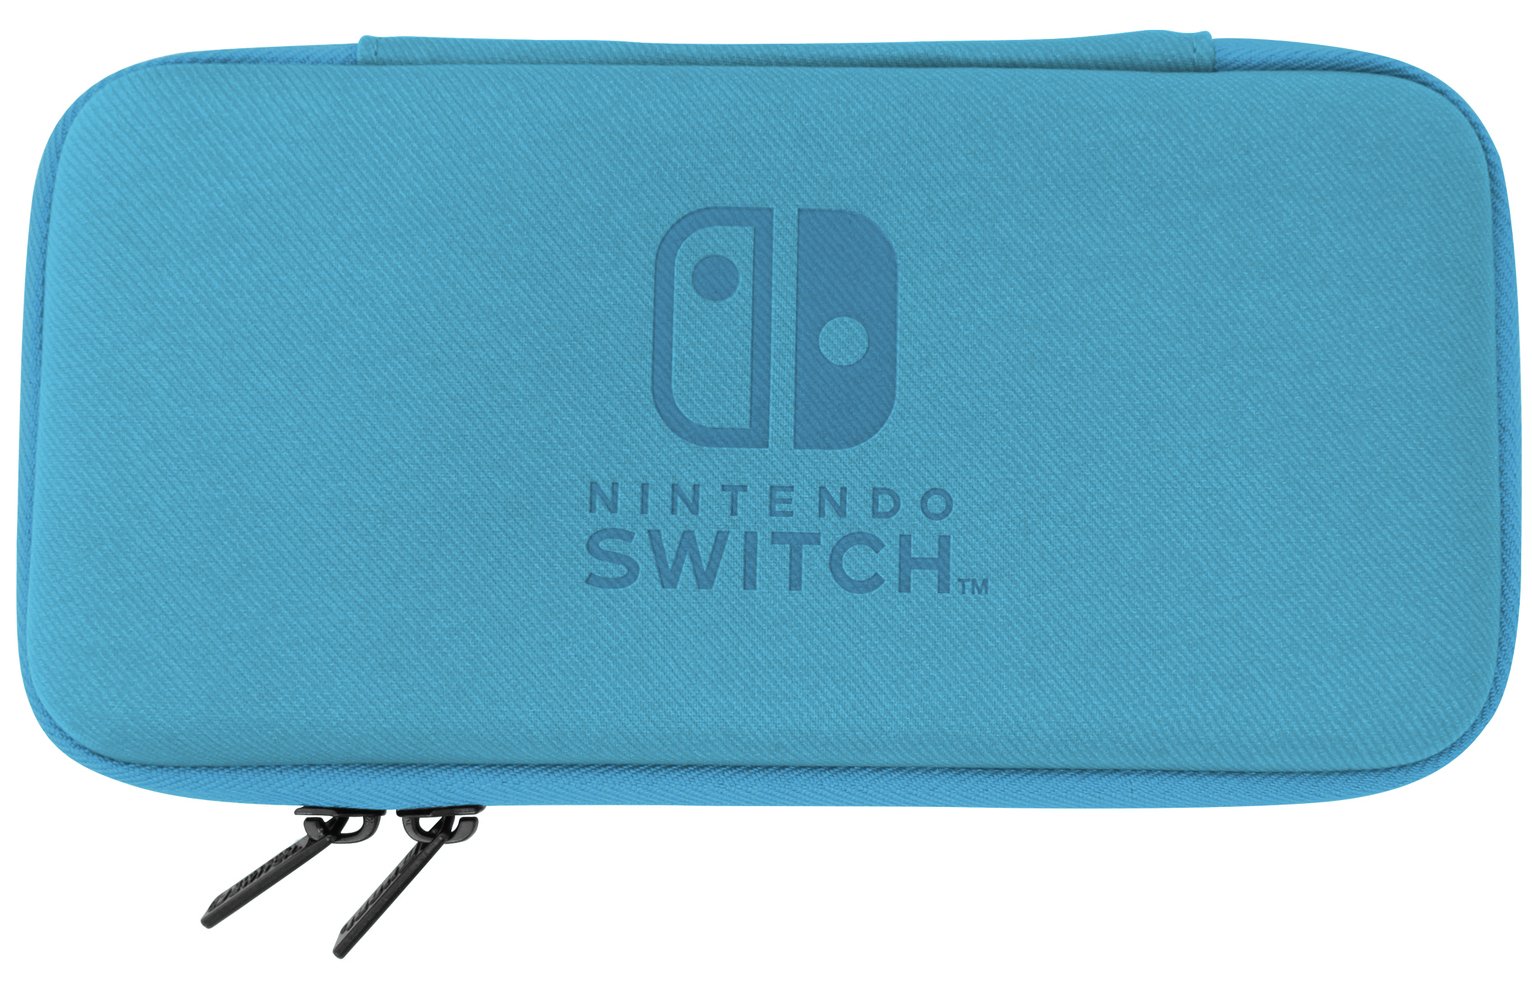 Nintendo Switch Lite Tough Pouch Review